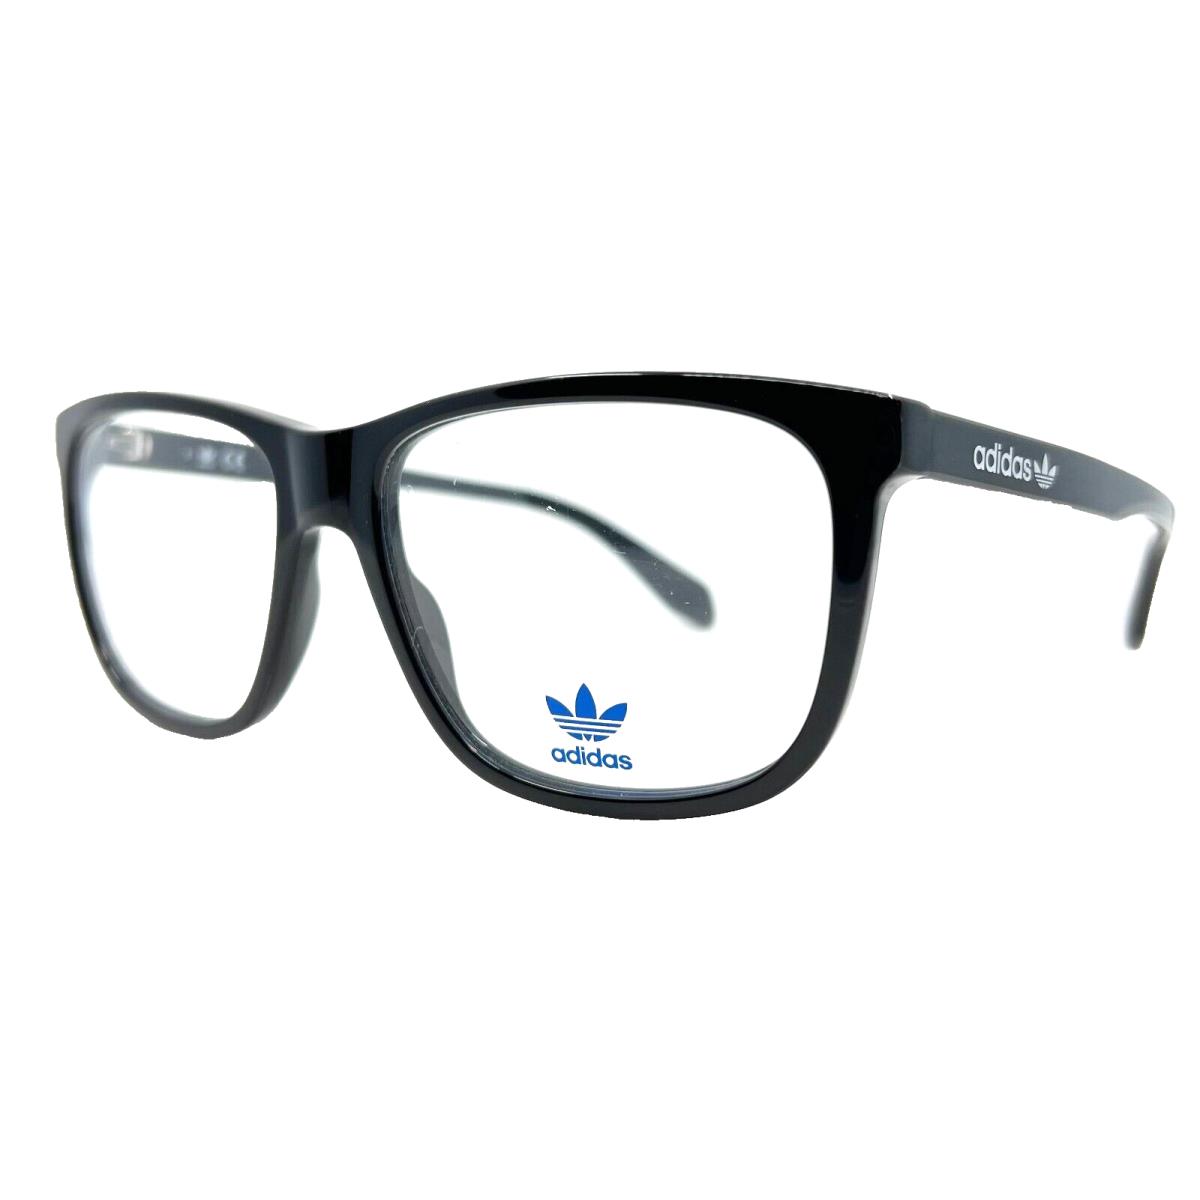 Adidas Originals - OR5012 001 56/16/145 - Black Eyeglasses Case